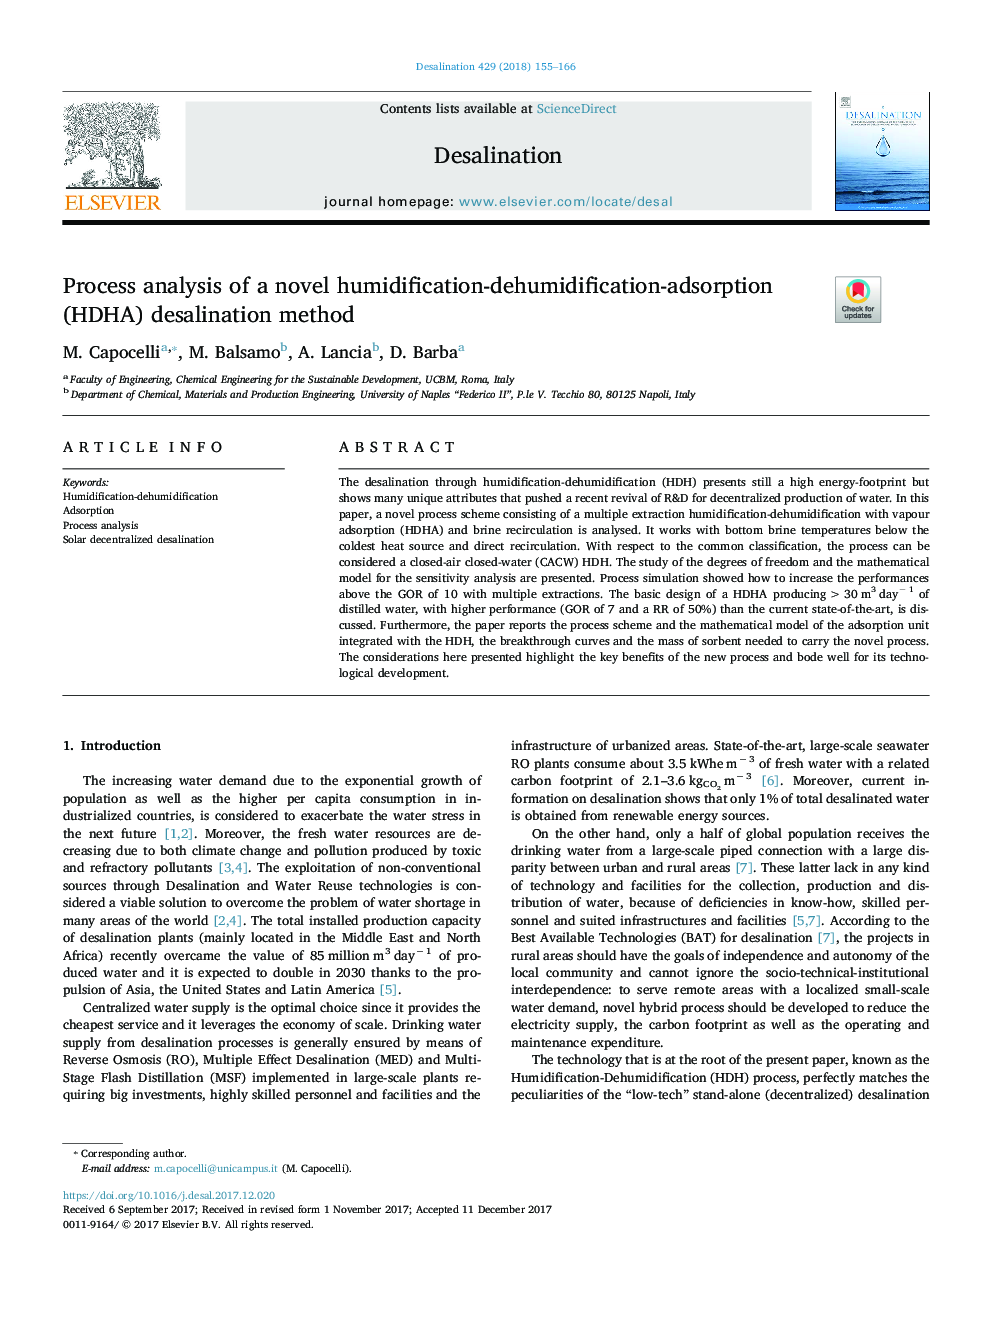 Process analysis of a novel humidification-dehumidification-adsorption (HDHA) desalination method